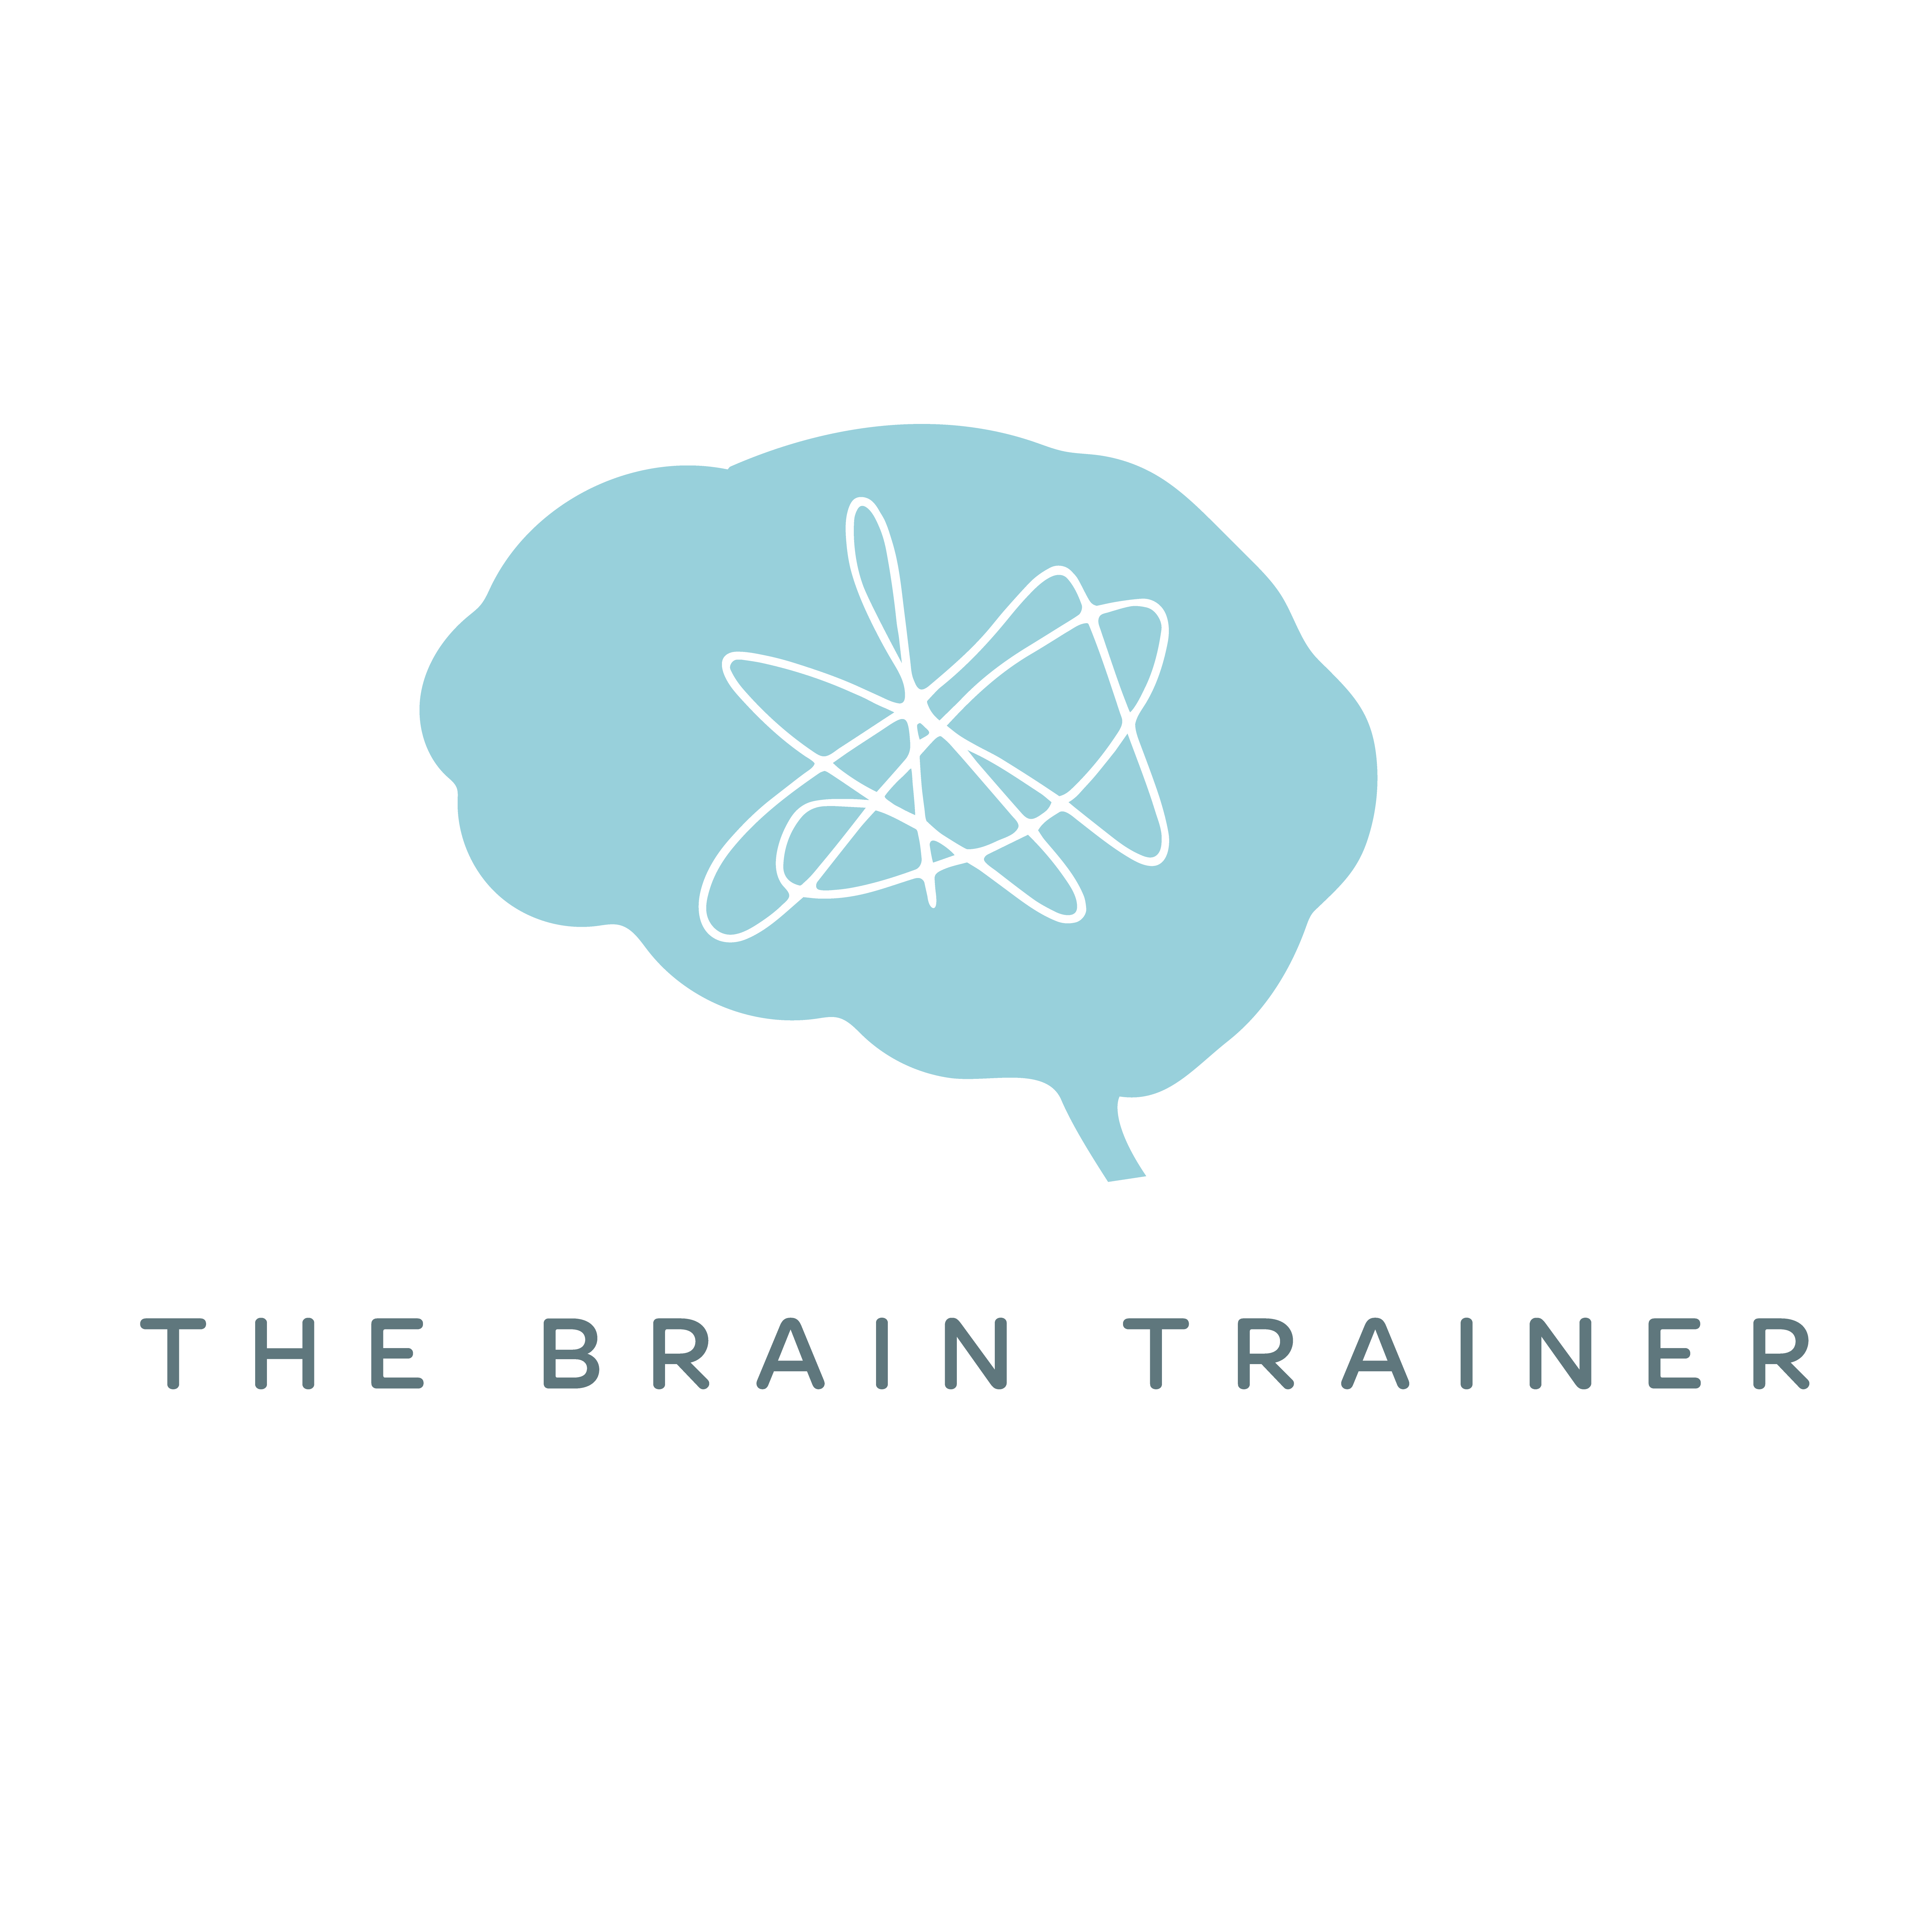 The Brain Trainer